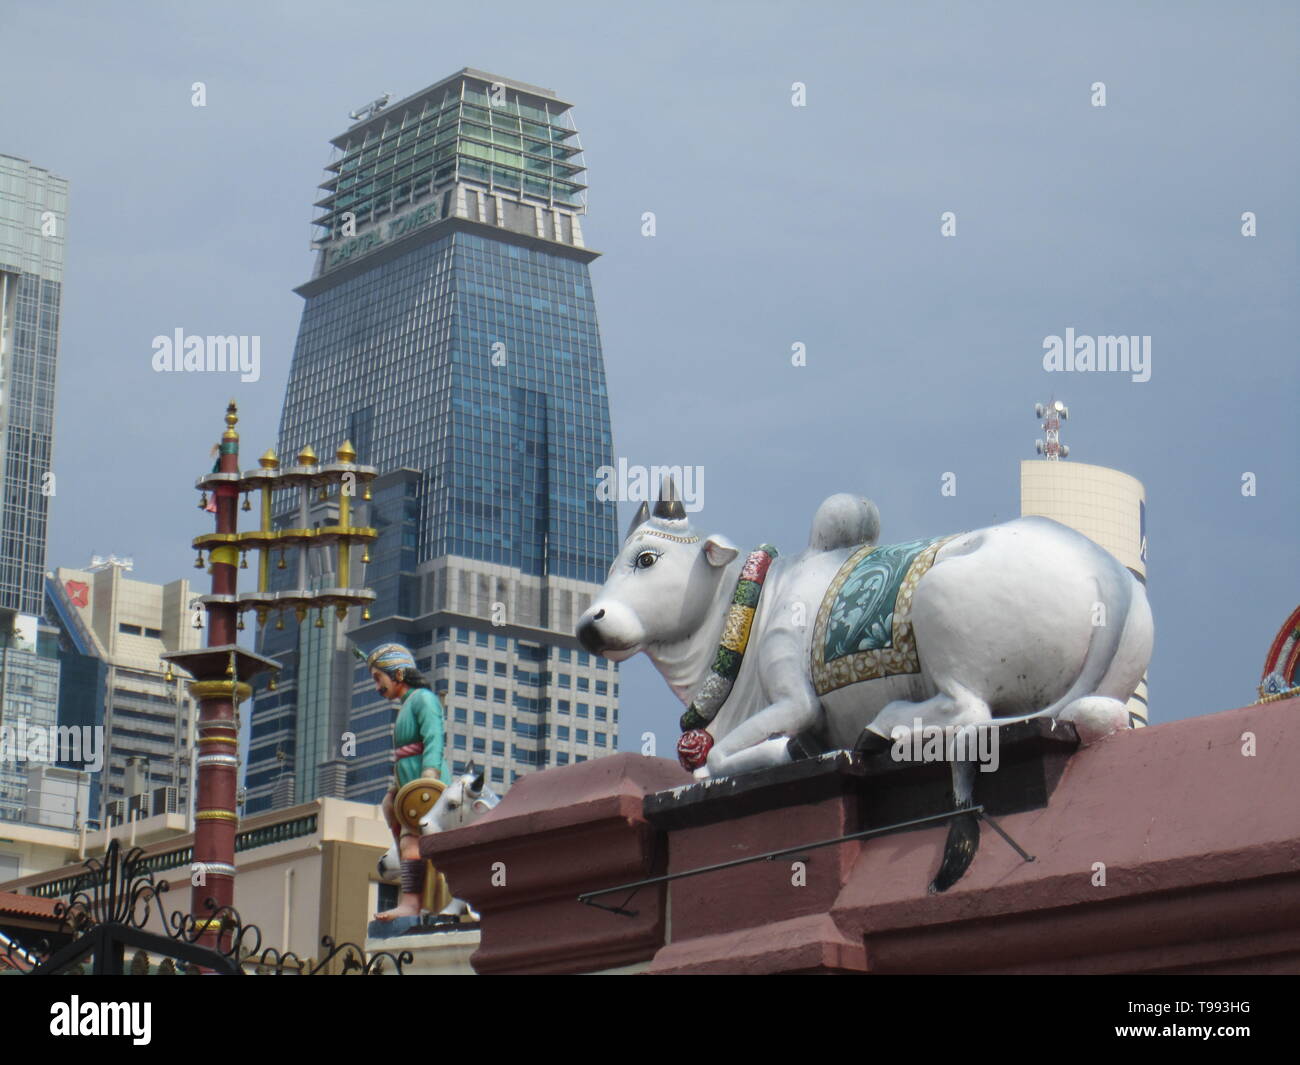 Sri Mariamman Temple, Singapore Stock Photo